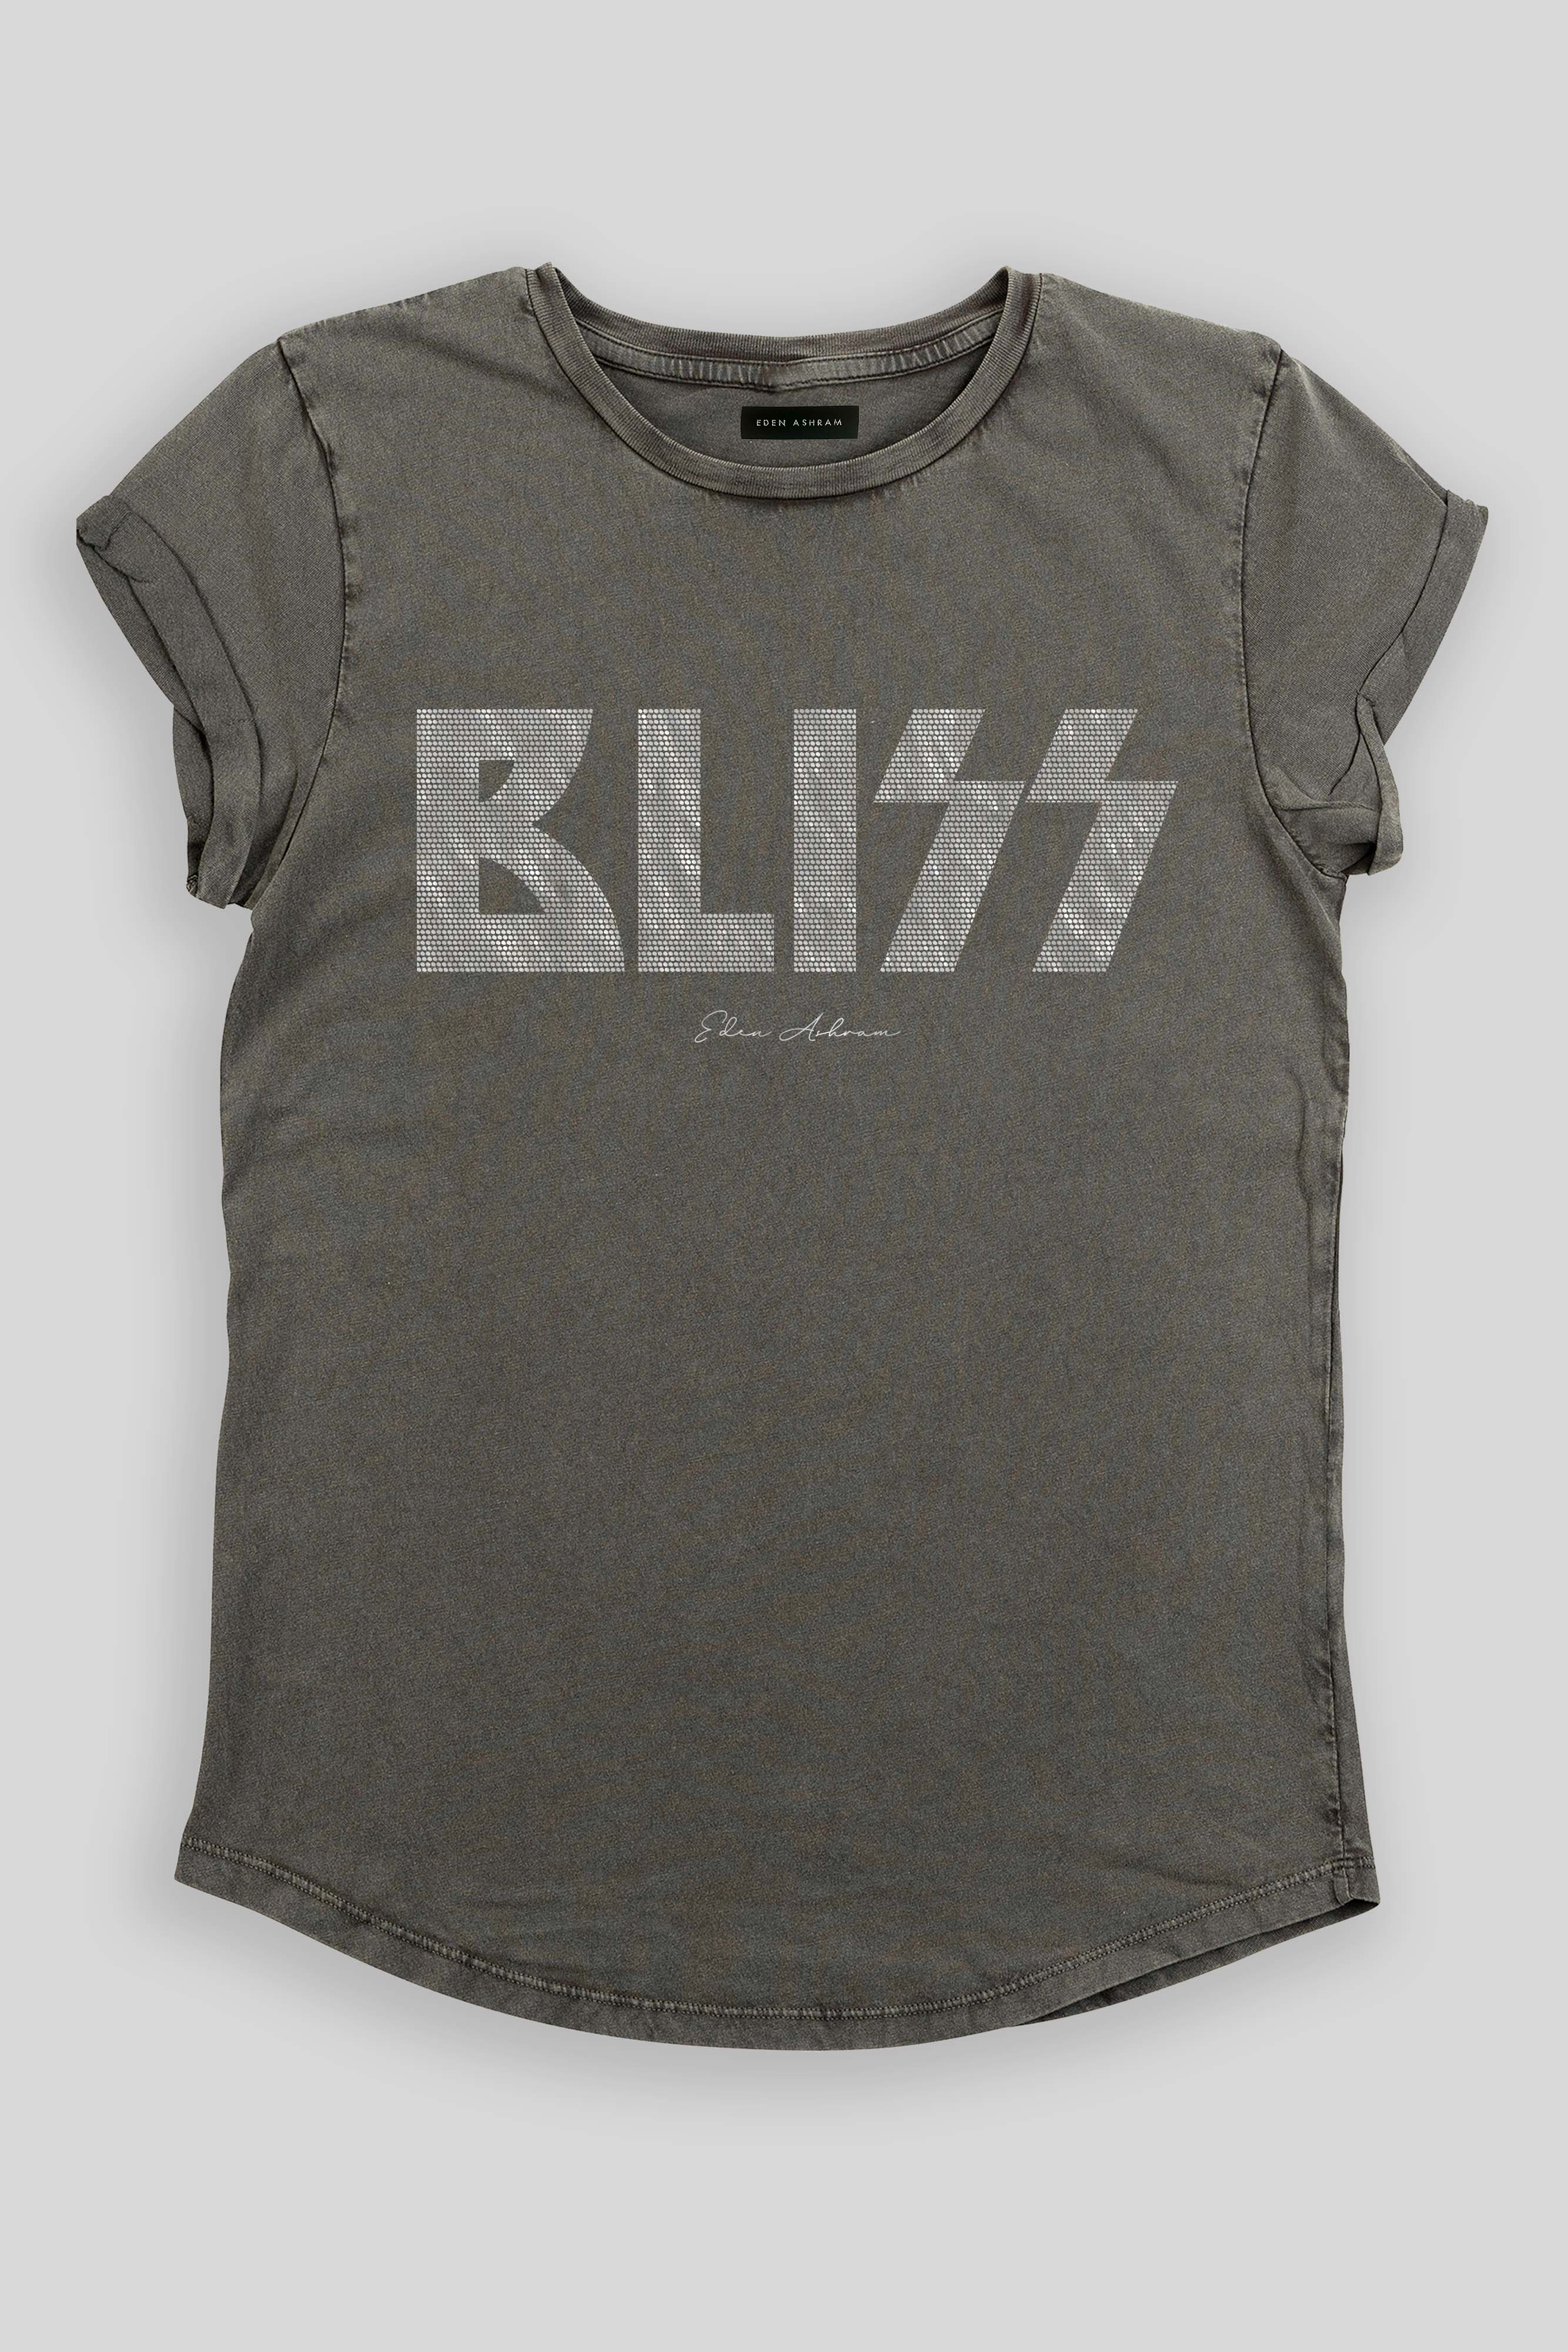 EDEN ASHRAM BLISS Rolled Sleeve Tour T-Shirt Stonewash Grey | Silver